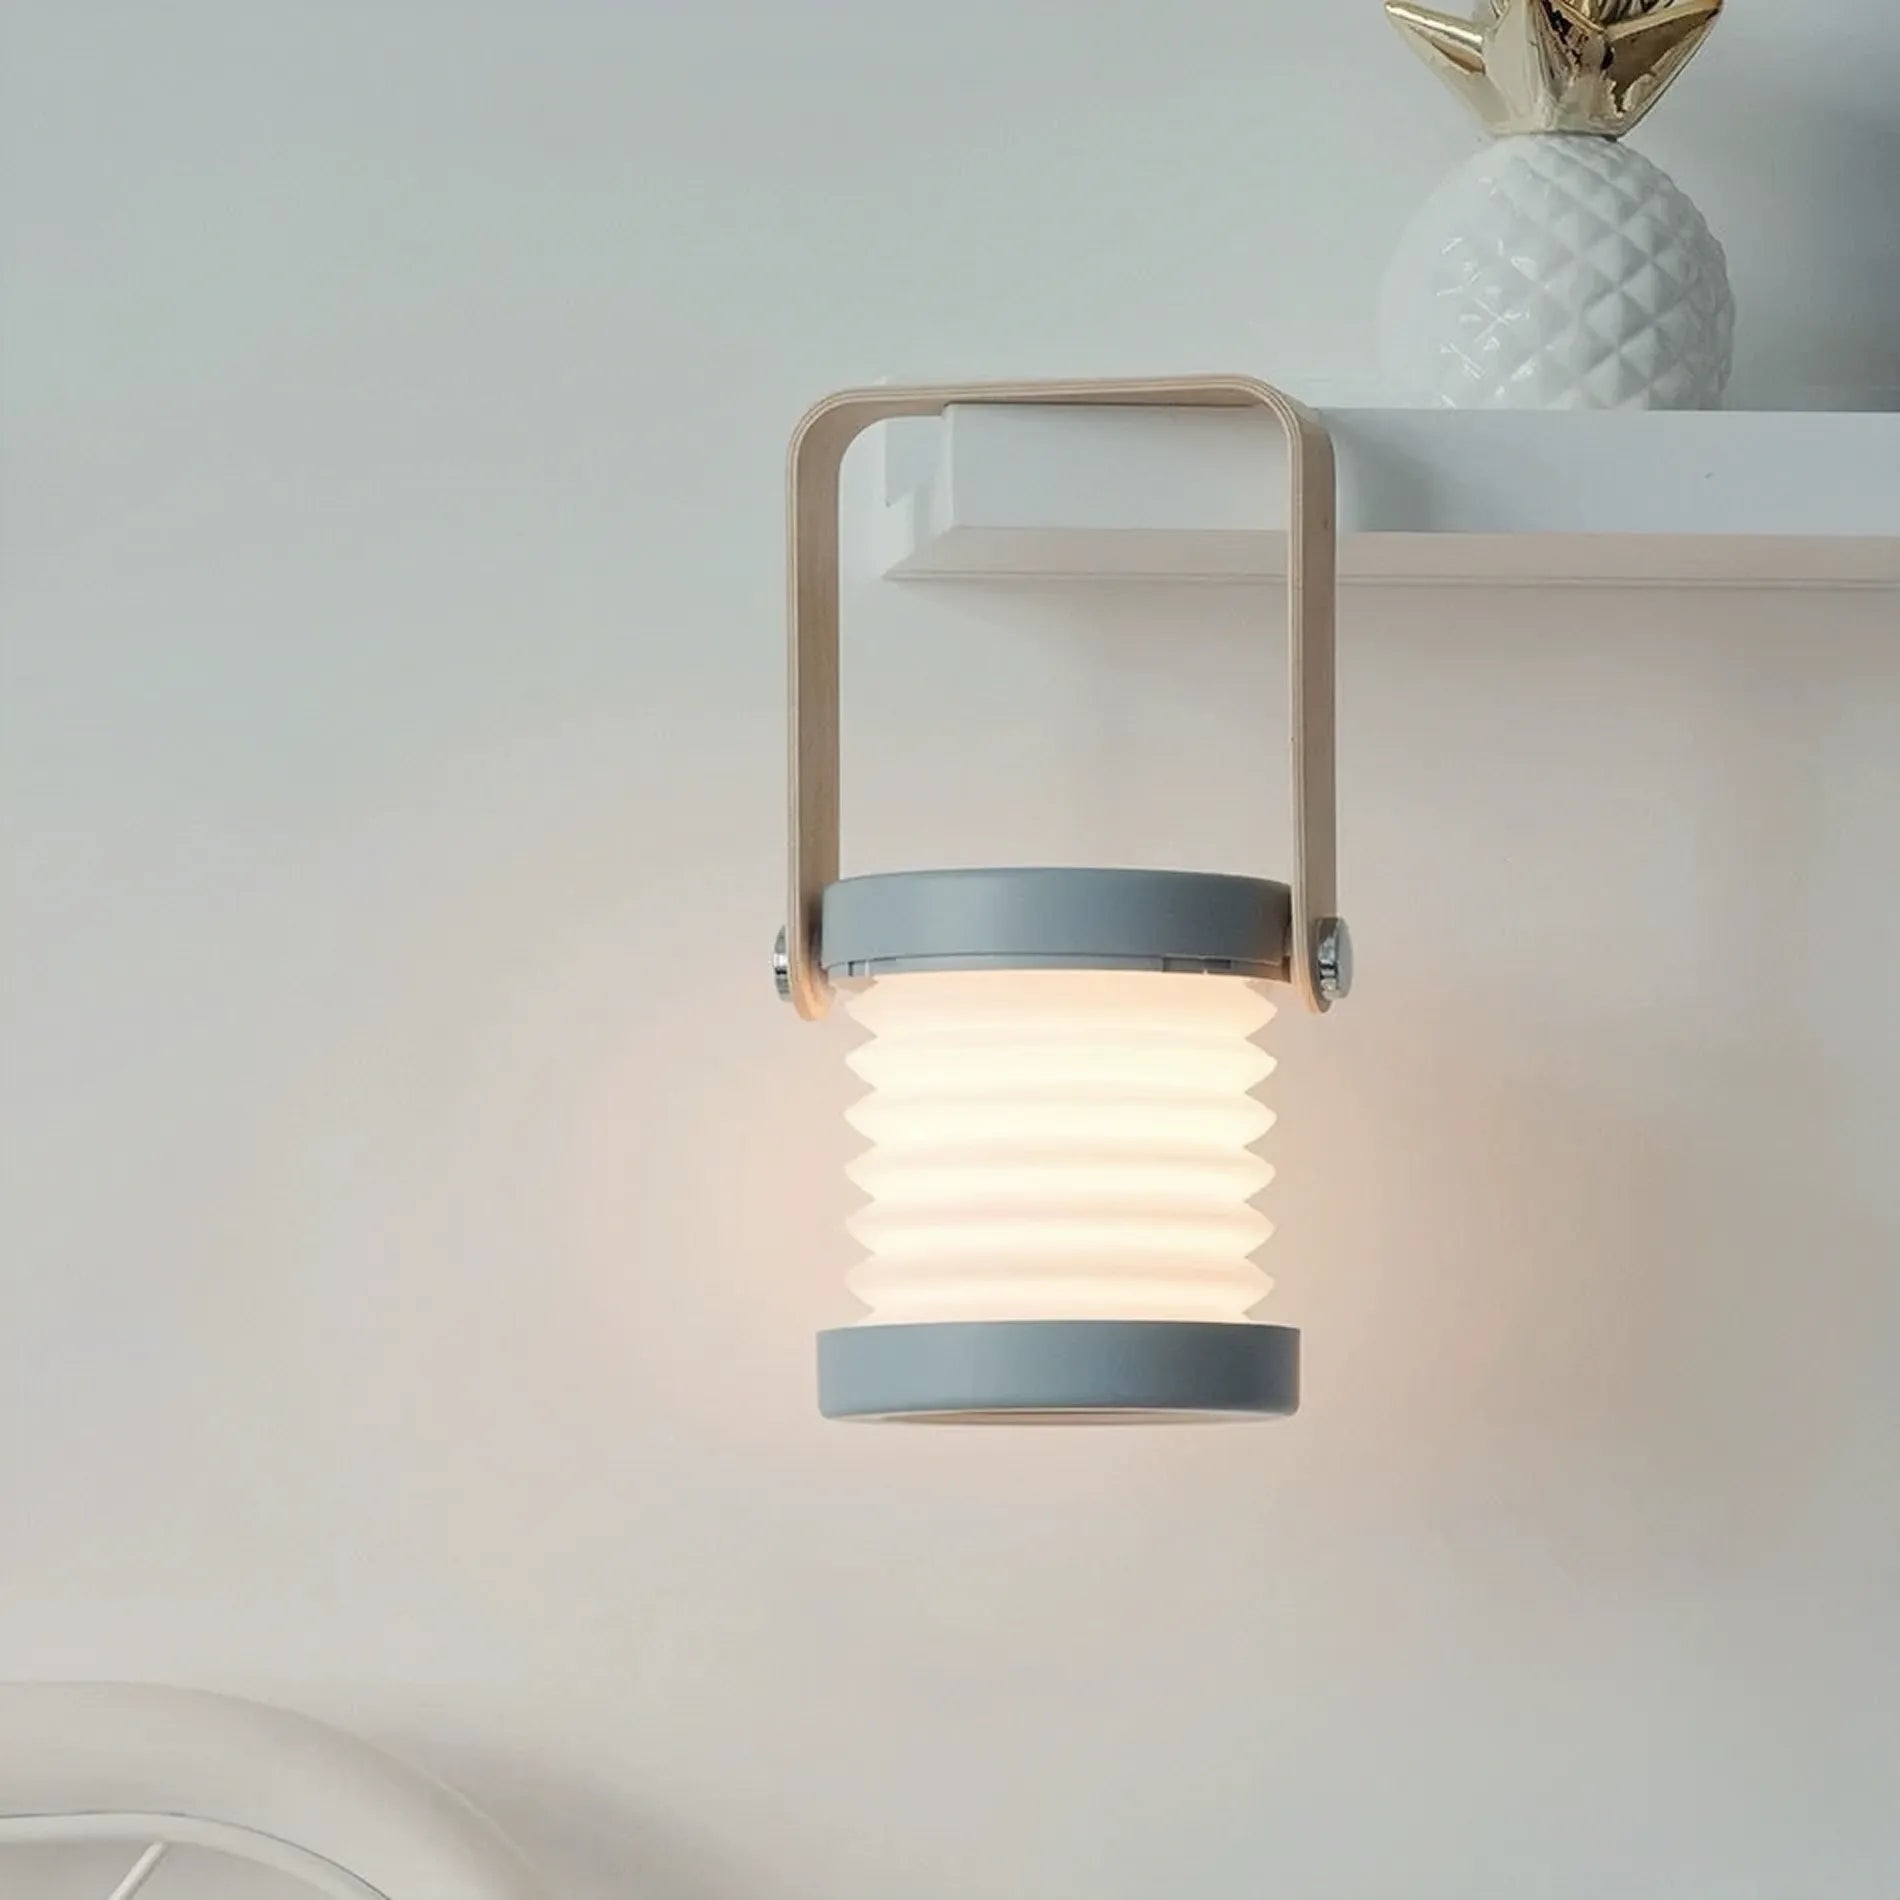 Multi-Purpose Table Lamp | Iconic Design Lantern Lamp